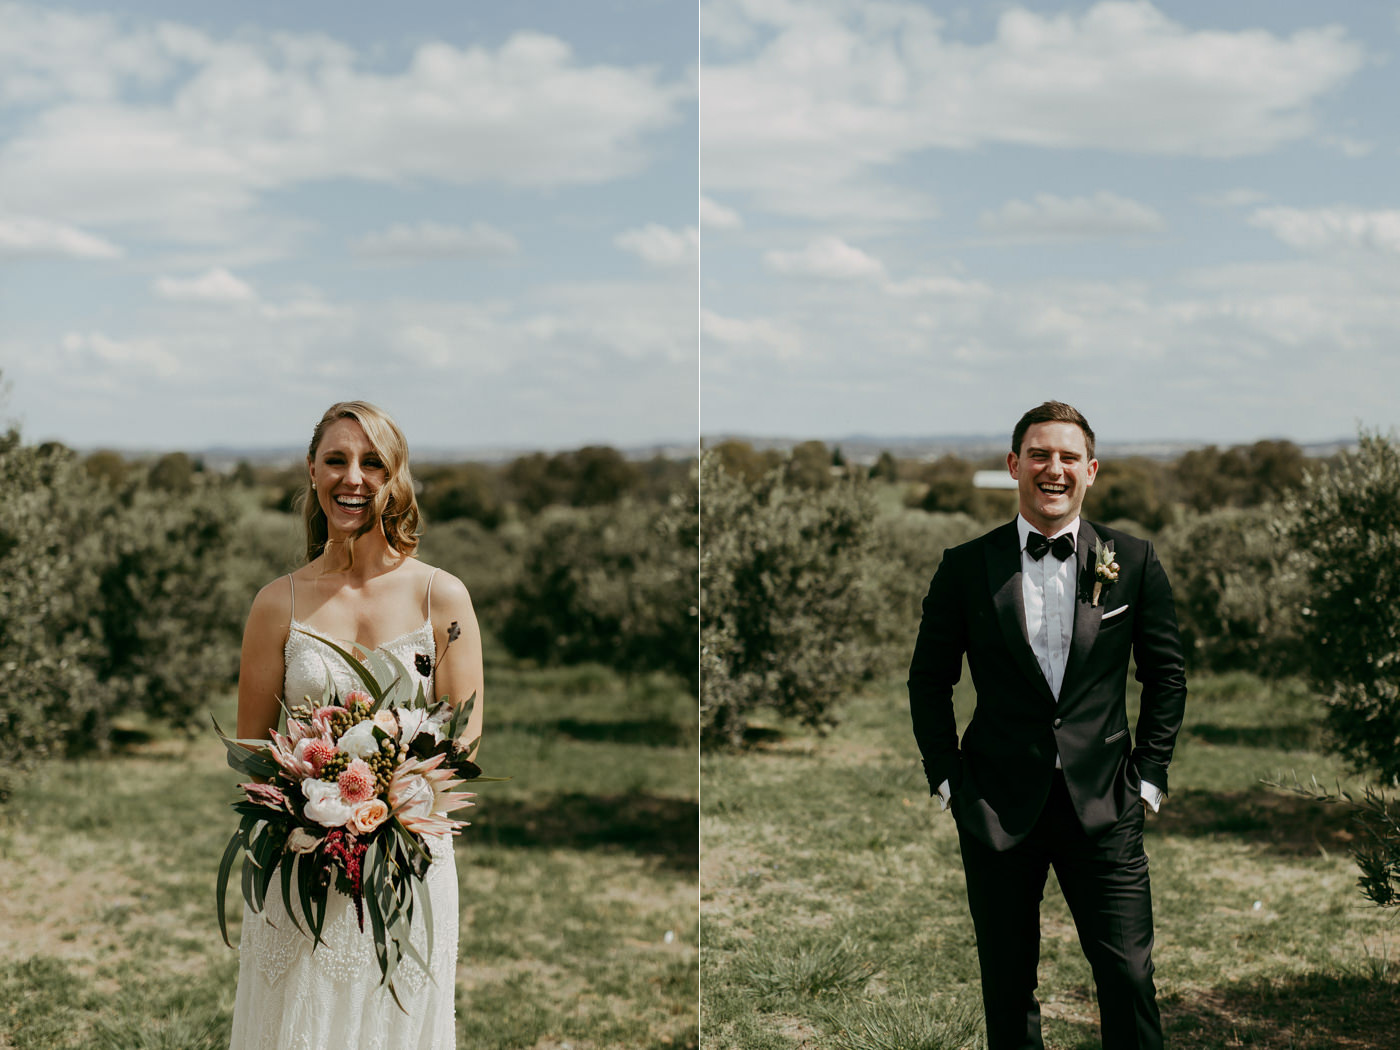 Anthony & Eliet - Wagga Wagga Wedding - Country NSW - Samantha Heather Photography-75.jpg